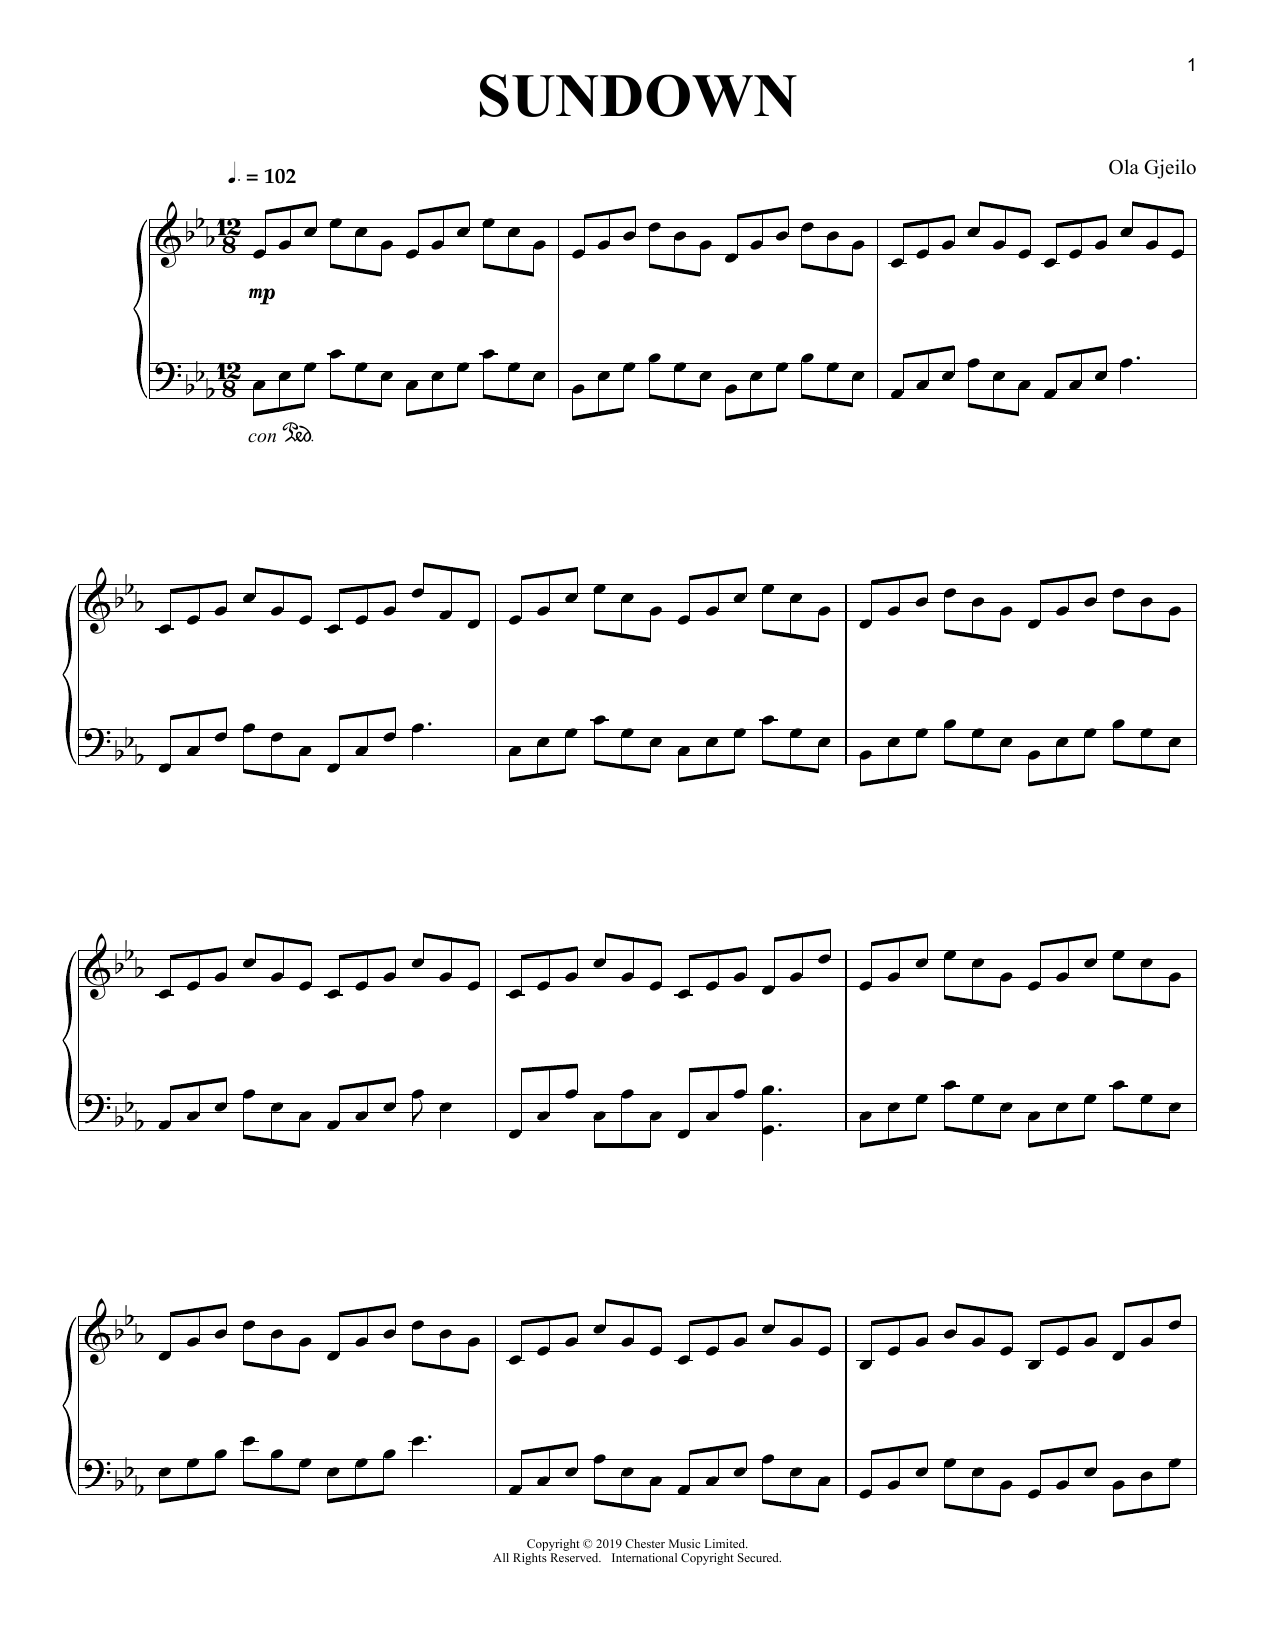 Ola Gjeilo Sundown Sheet Music Notes & Chords for Piano Solo - Download or Print PDF